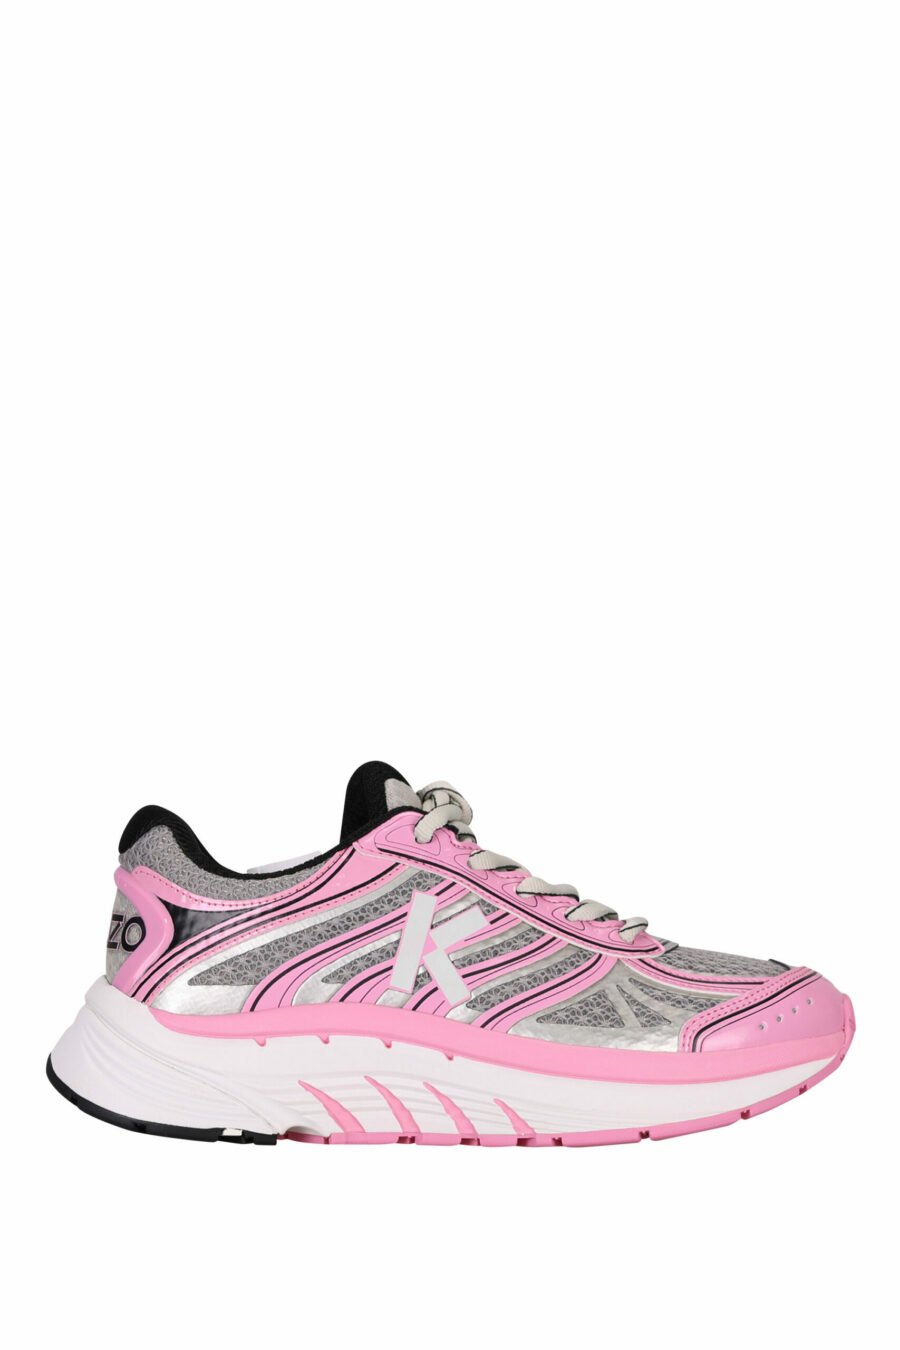 Zapatillas grises con rosa "kenzo tech runner" - 3612230548671 scaled